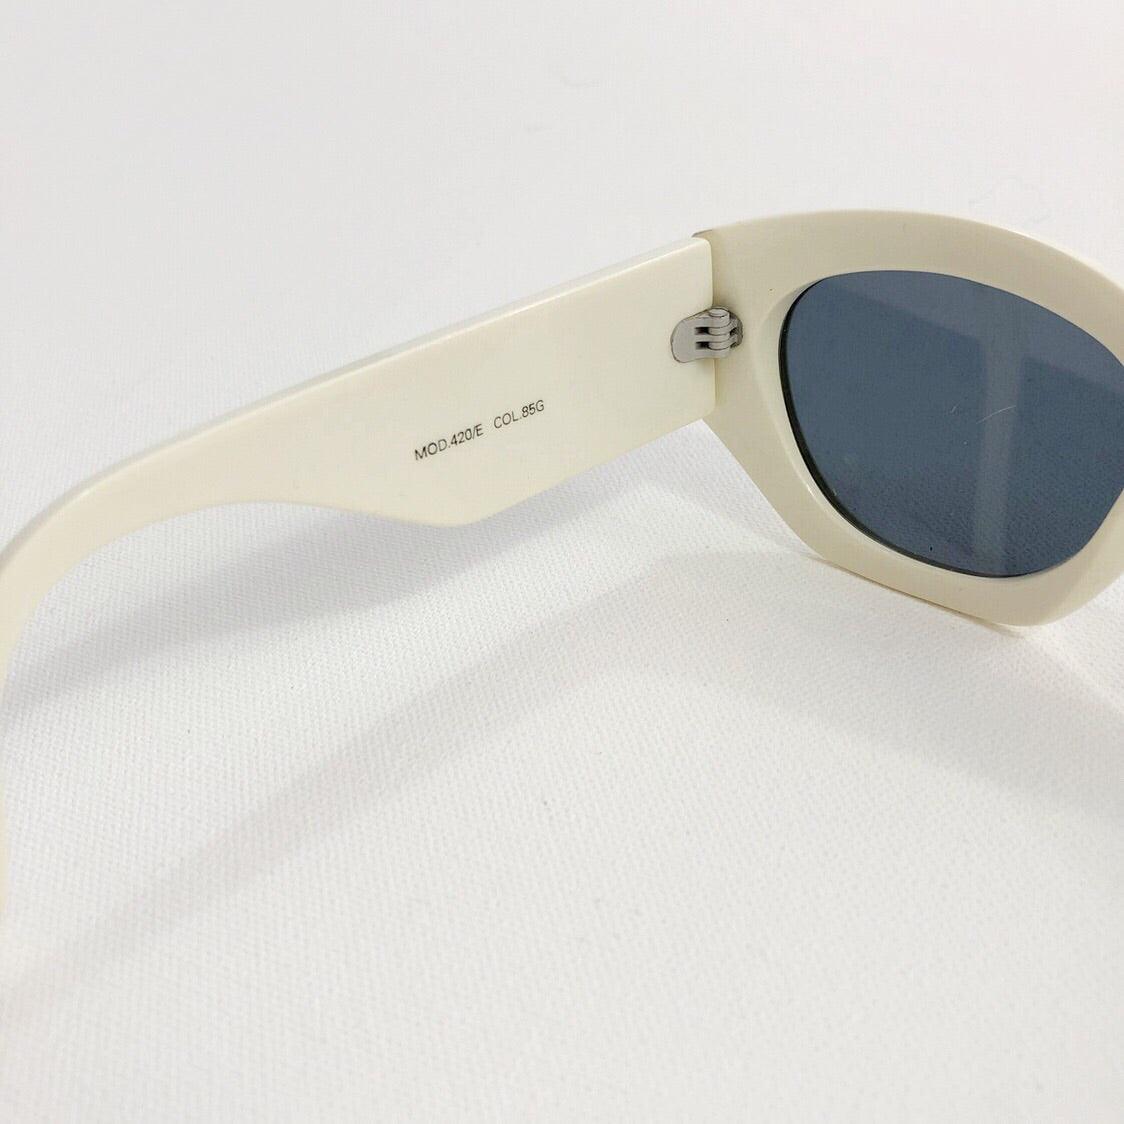 Gianni Versace 90’s Mod 420/ E sunglasses - Known Source